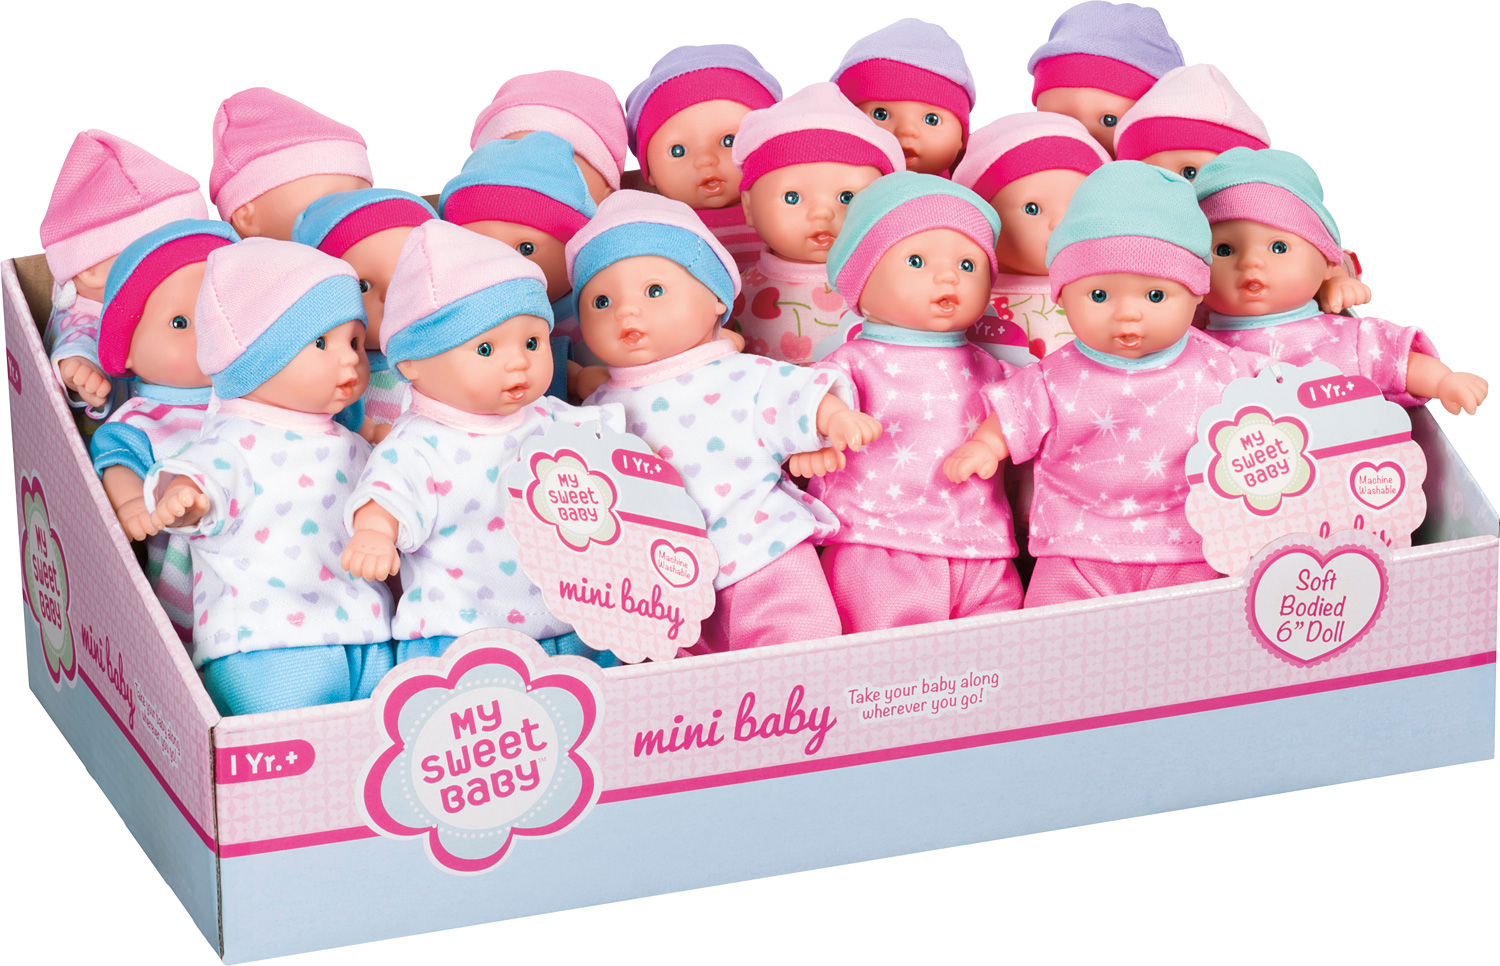 MINI BABIES – The Children's Gift Shop